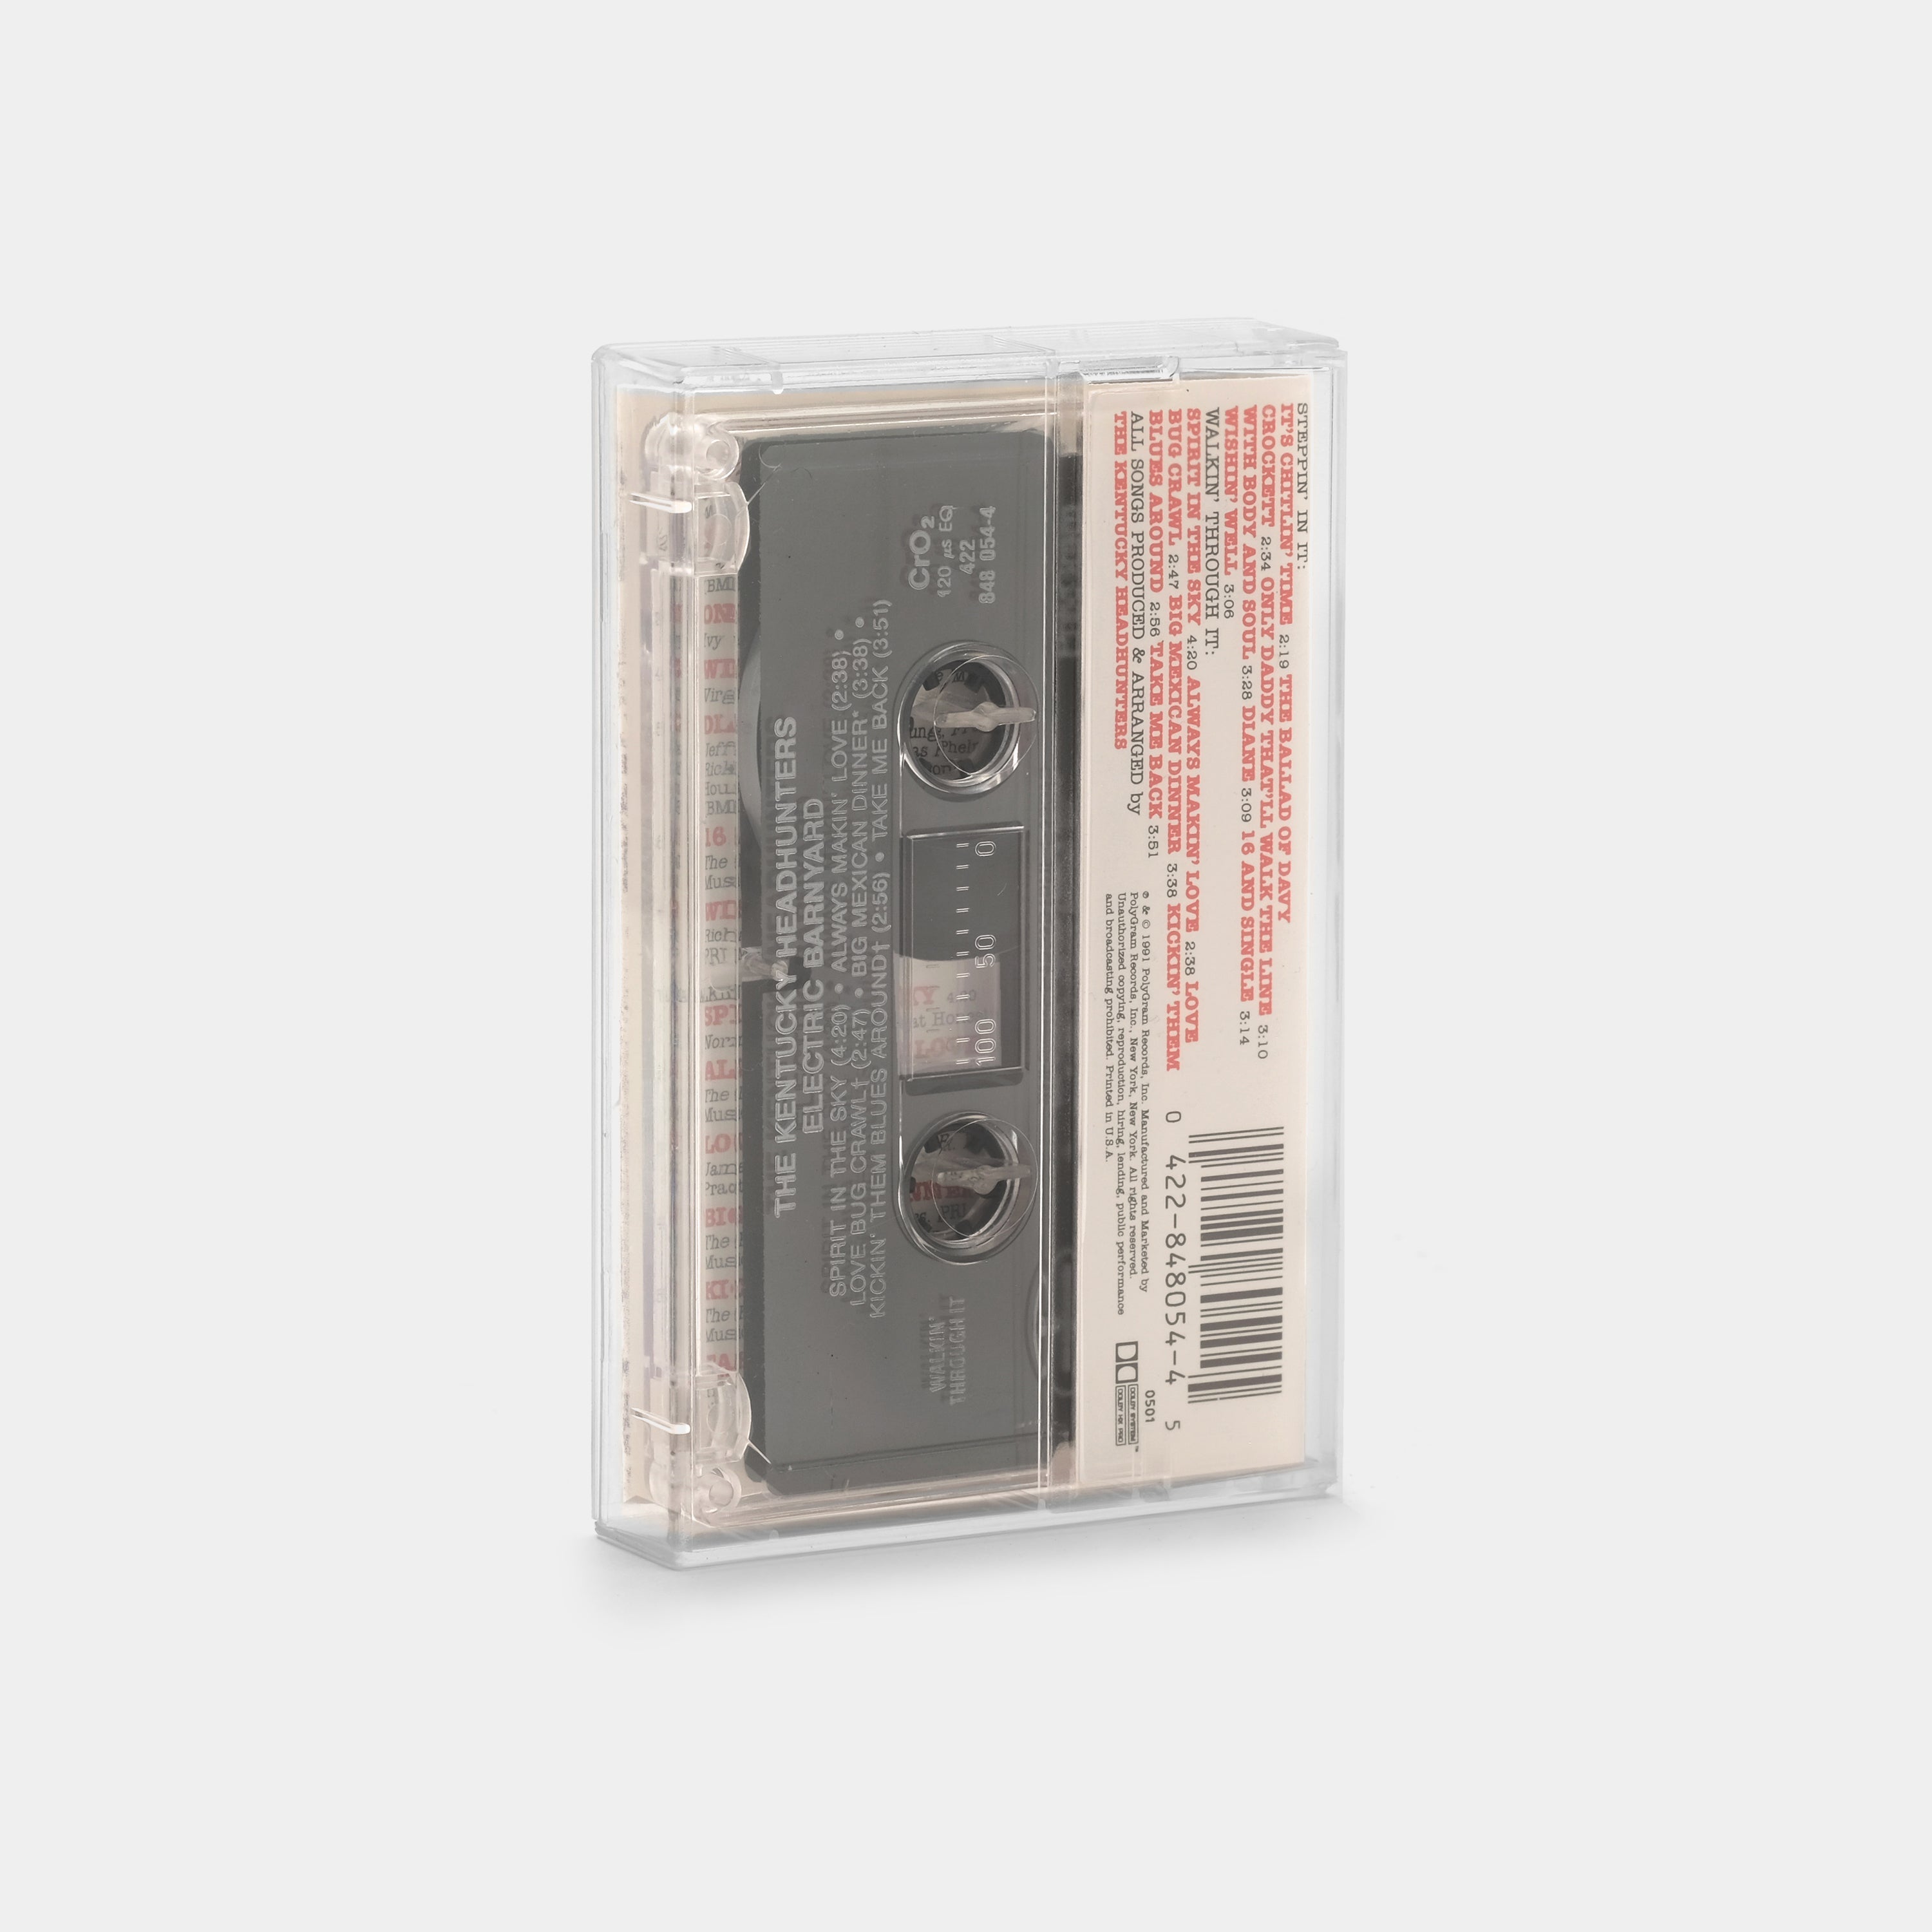 The Kentucky Headhunters - Electric Barnyard Cassette Tape